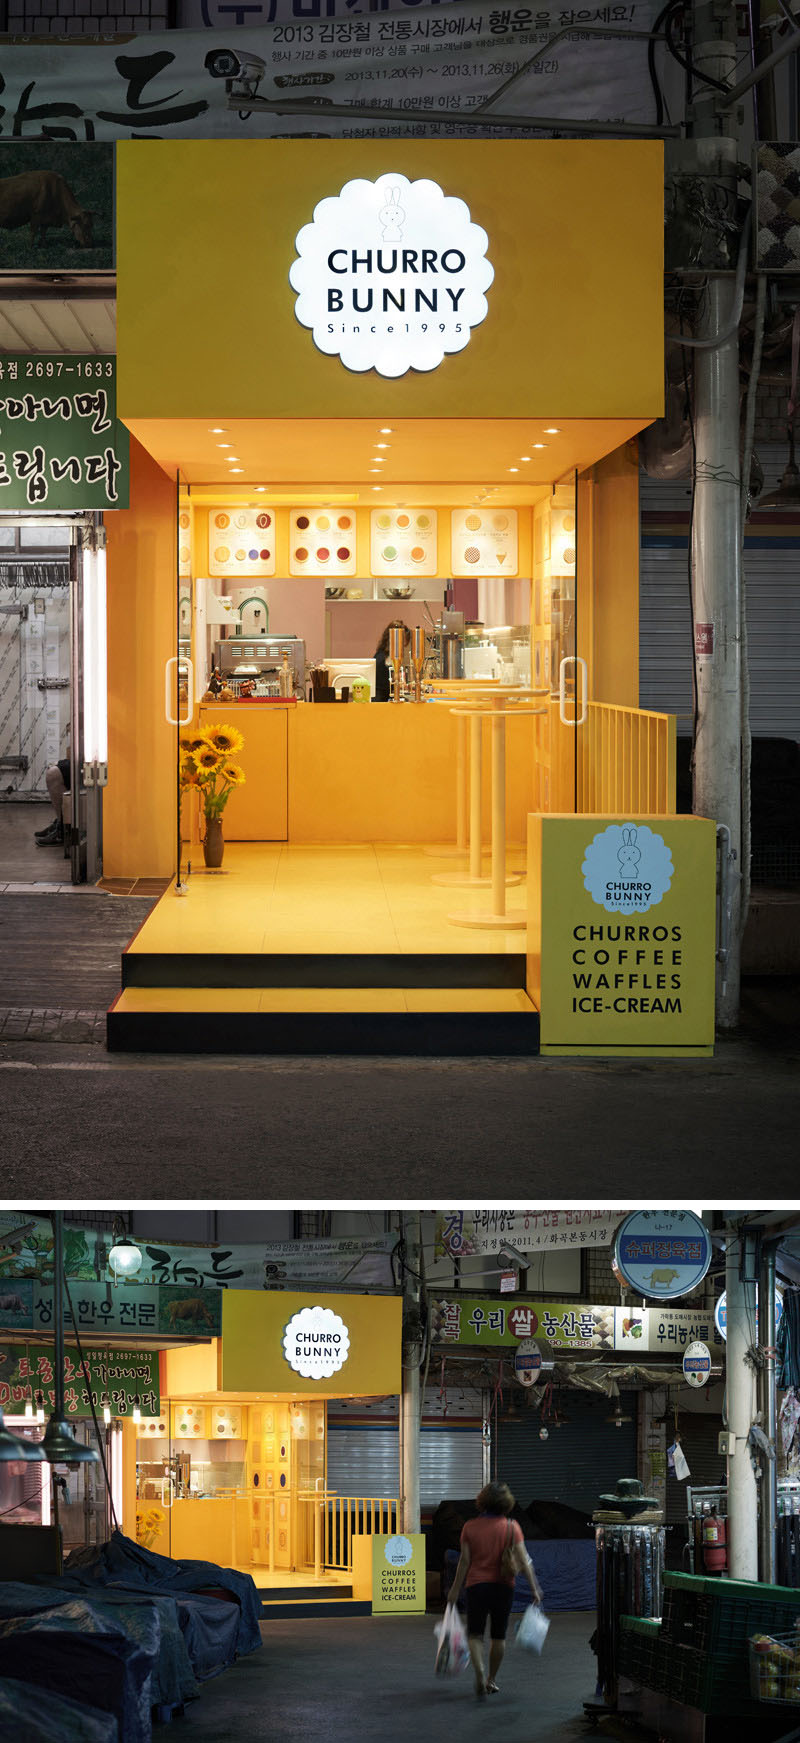 Coffee Shop Design Ideas